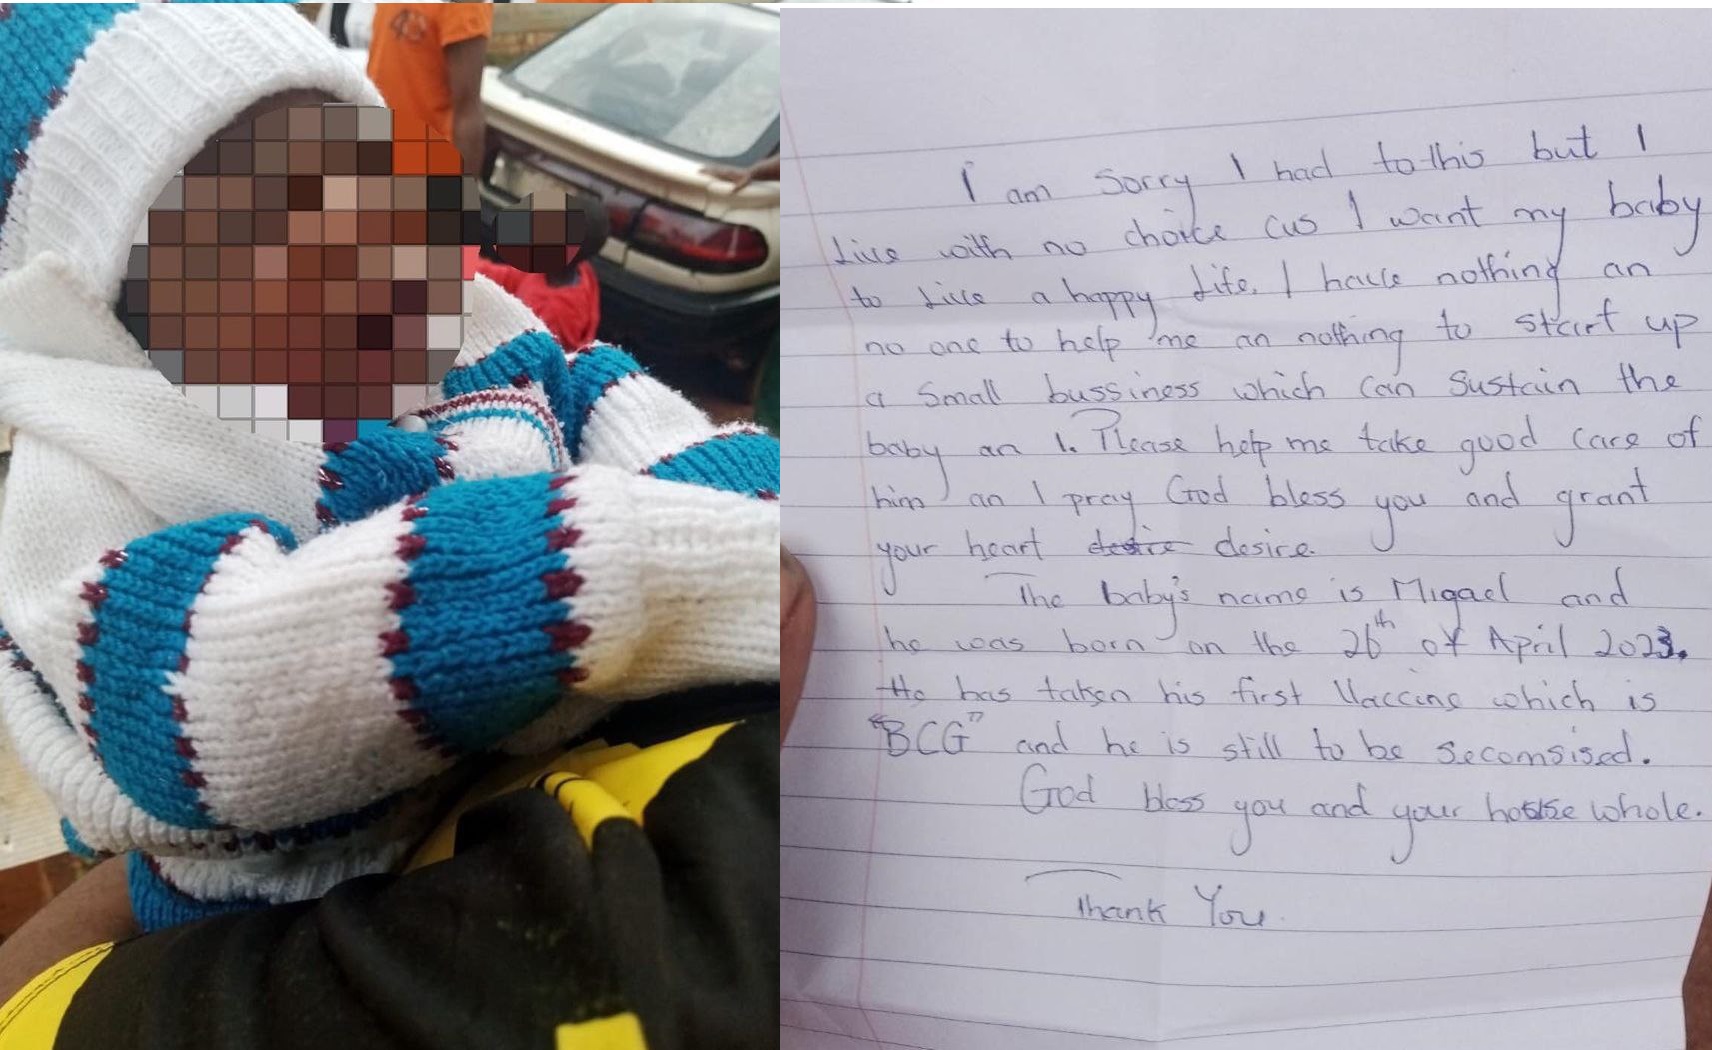 Nursing mom dumps her newborn baby, leaves heartbreaking notes